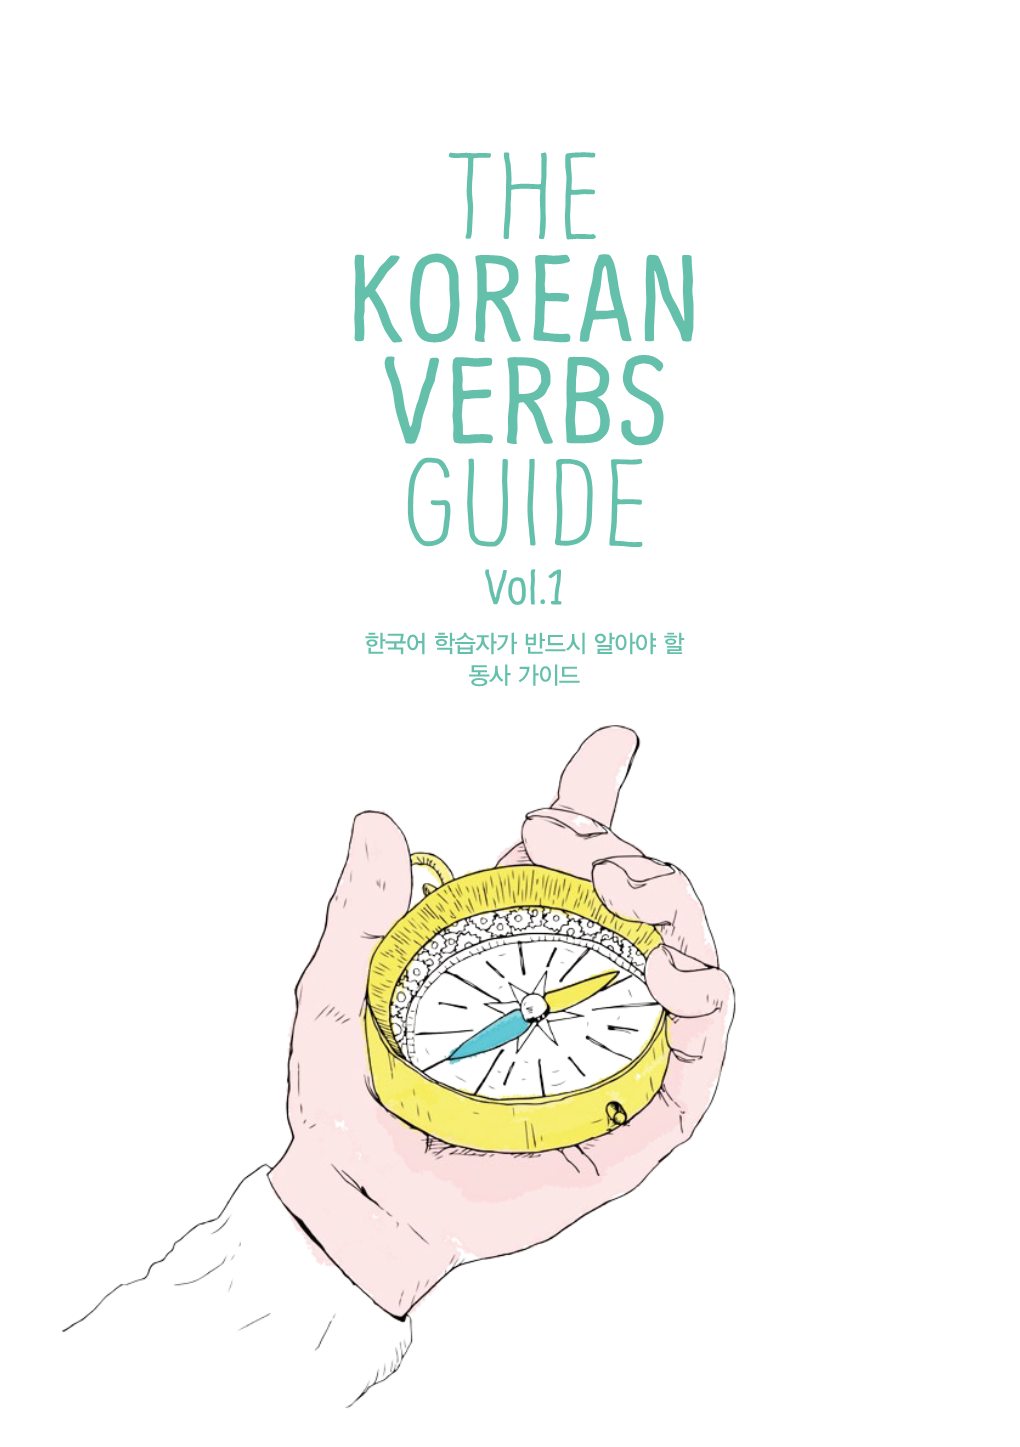 The Korean Verbs Guide Volume 1